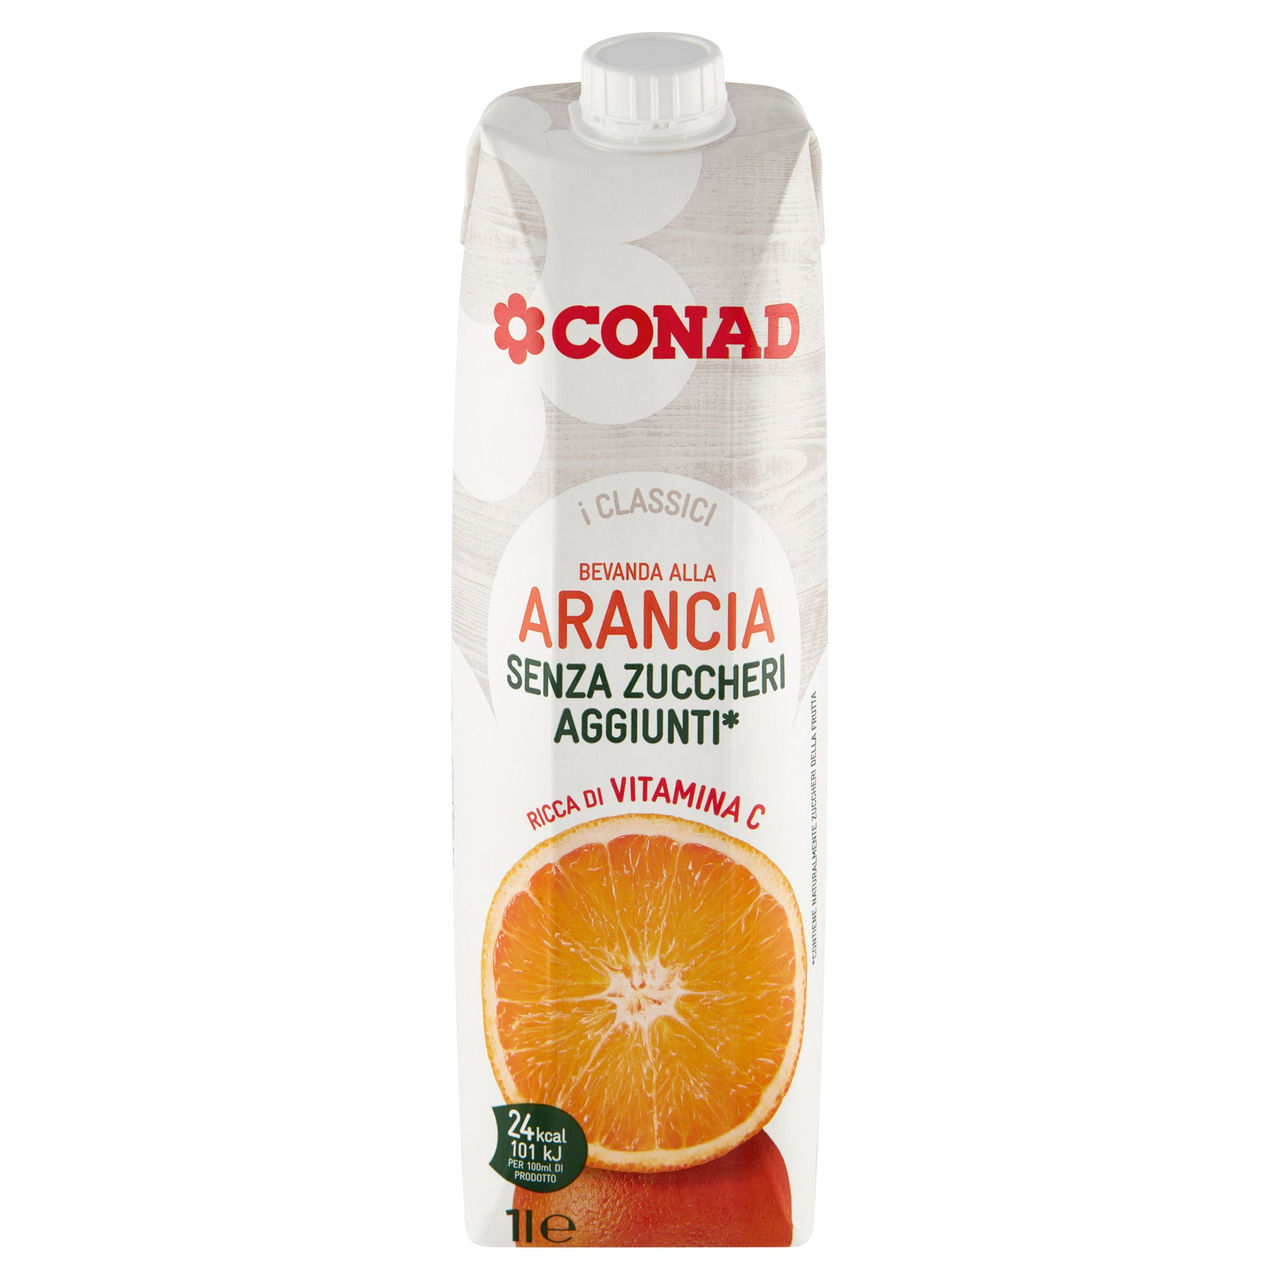 Bevanda all'arancia Conad in vendita online